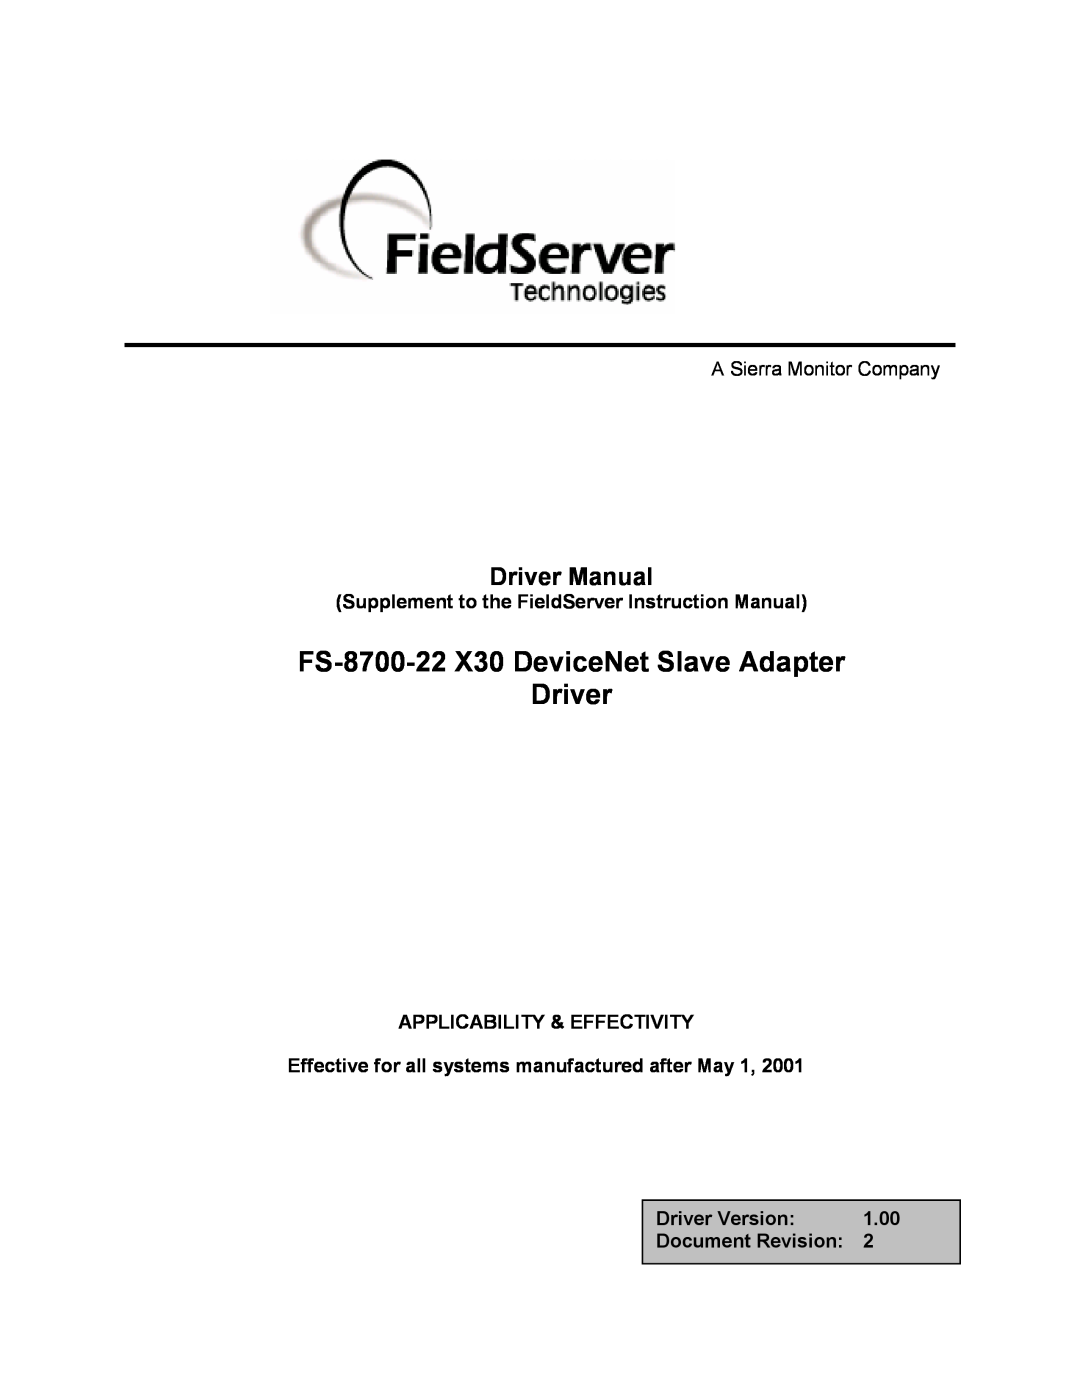 FieldServer instruction manual FS-8700-22 X30 DeviceNet Slave Adapter Driver, Driver Manual 